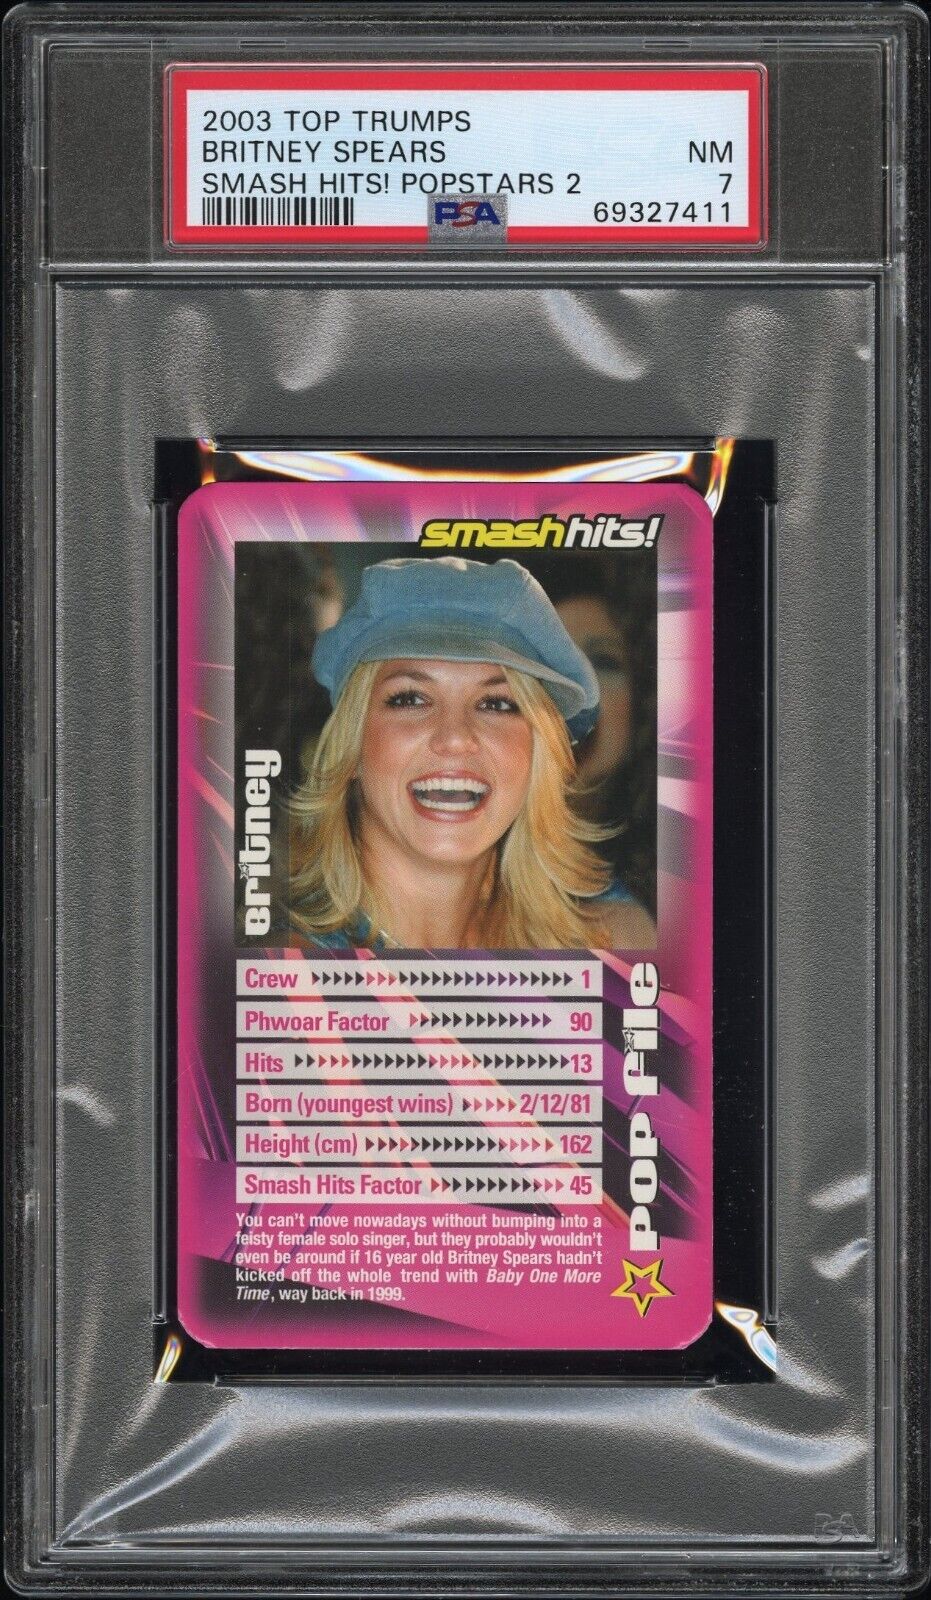 2003 Top Trumps Smash Hits Popstars 2 Britney Spears PSA 7 Near Mint - POP 1